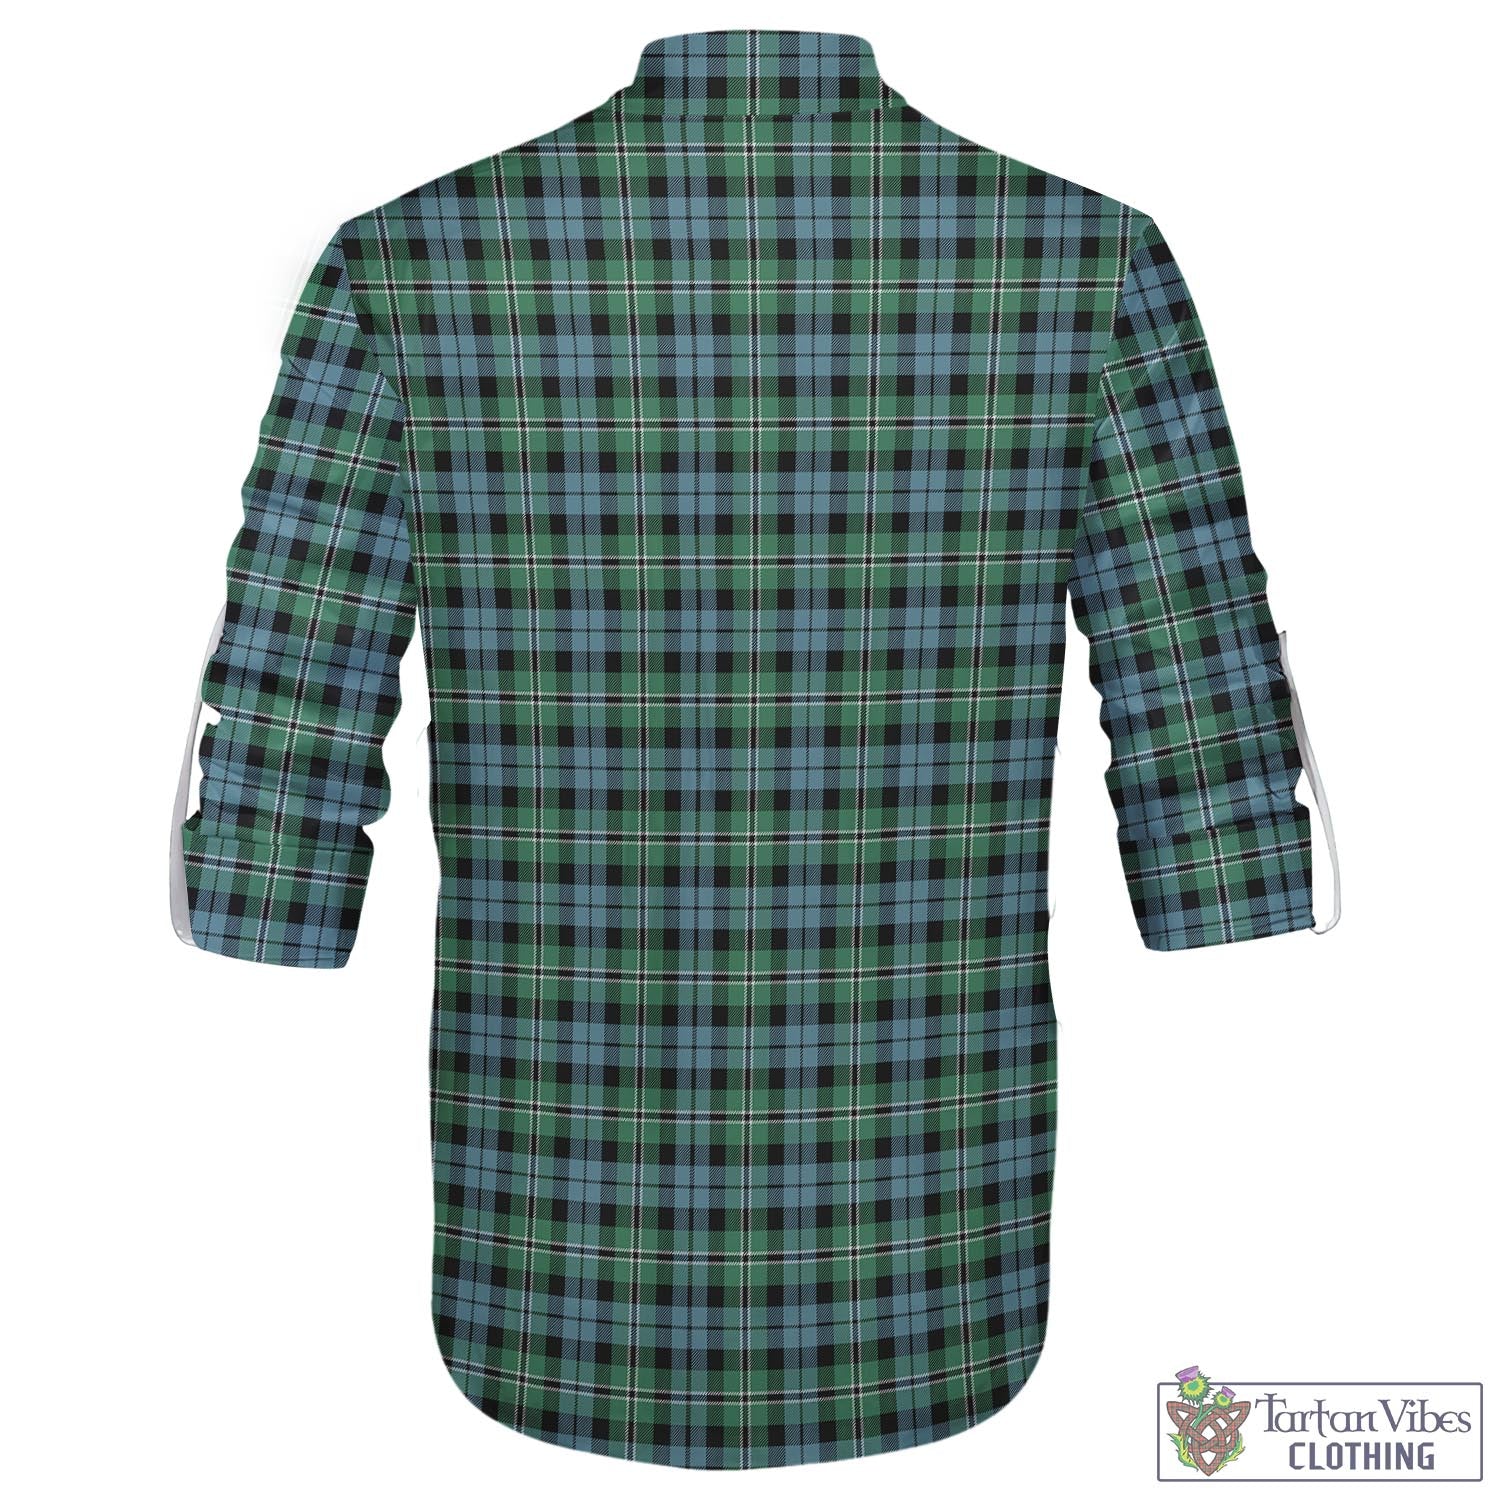 Tartan Vibes Clothing Melville Ancient Tartan Men's Scottish Traditional Jacobite Ghillie Kilt Shirt with Family Crest